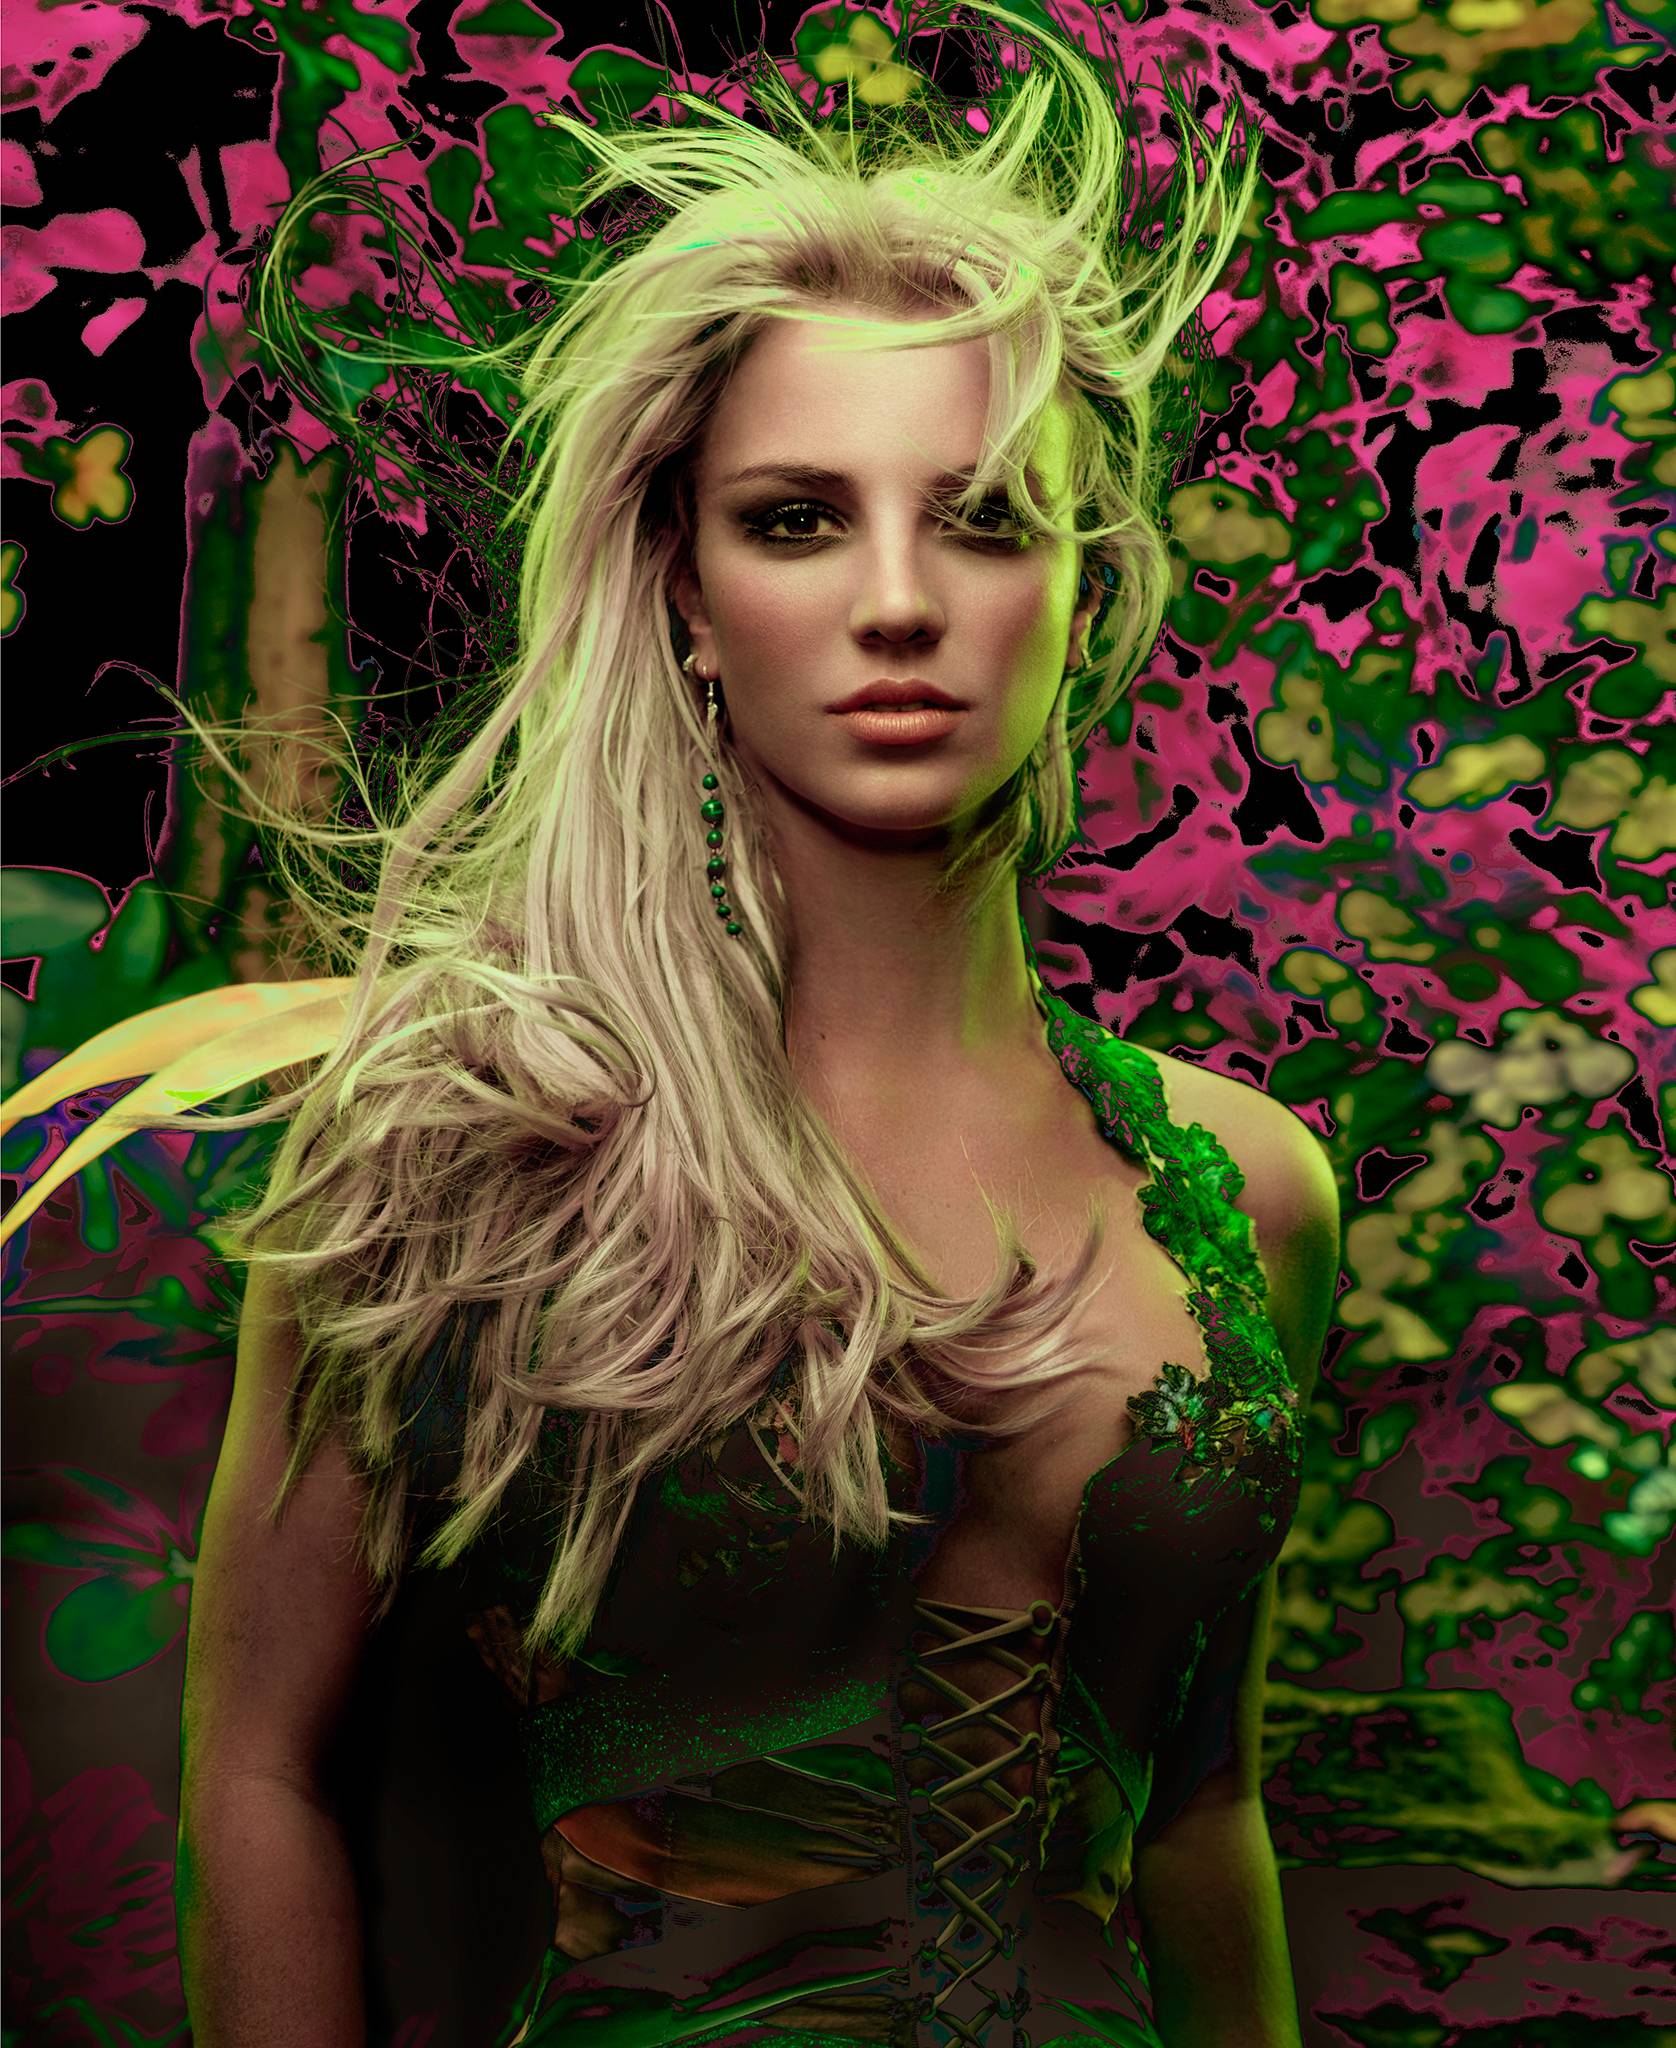 Markus Klinko, Britney Spears